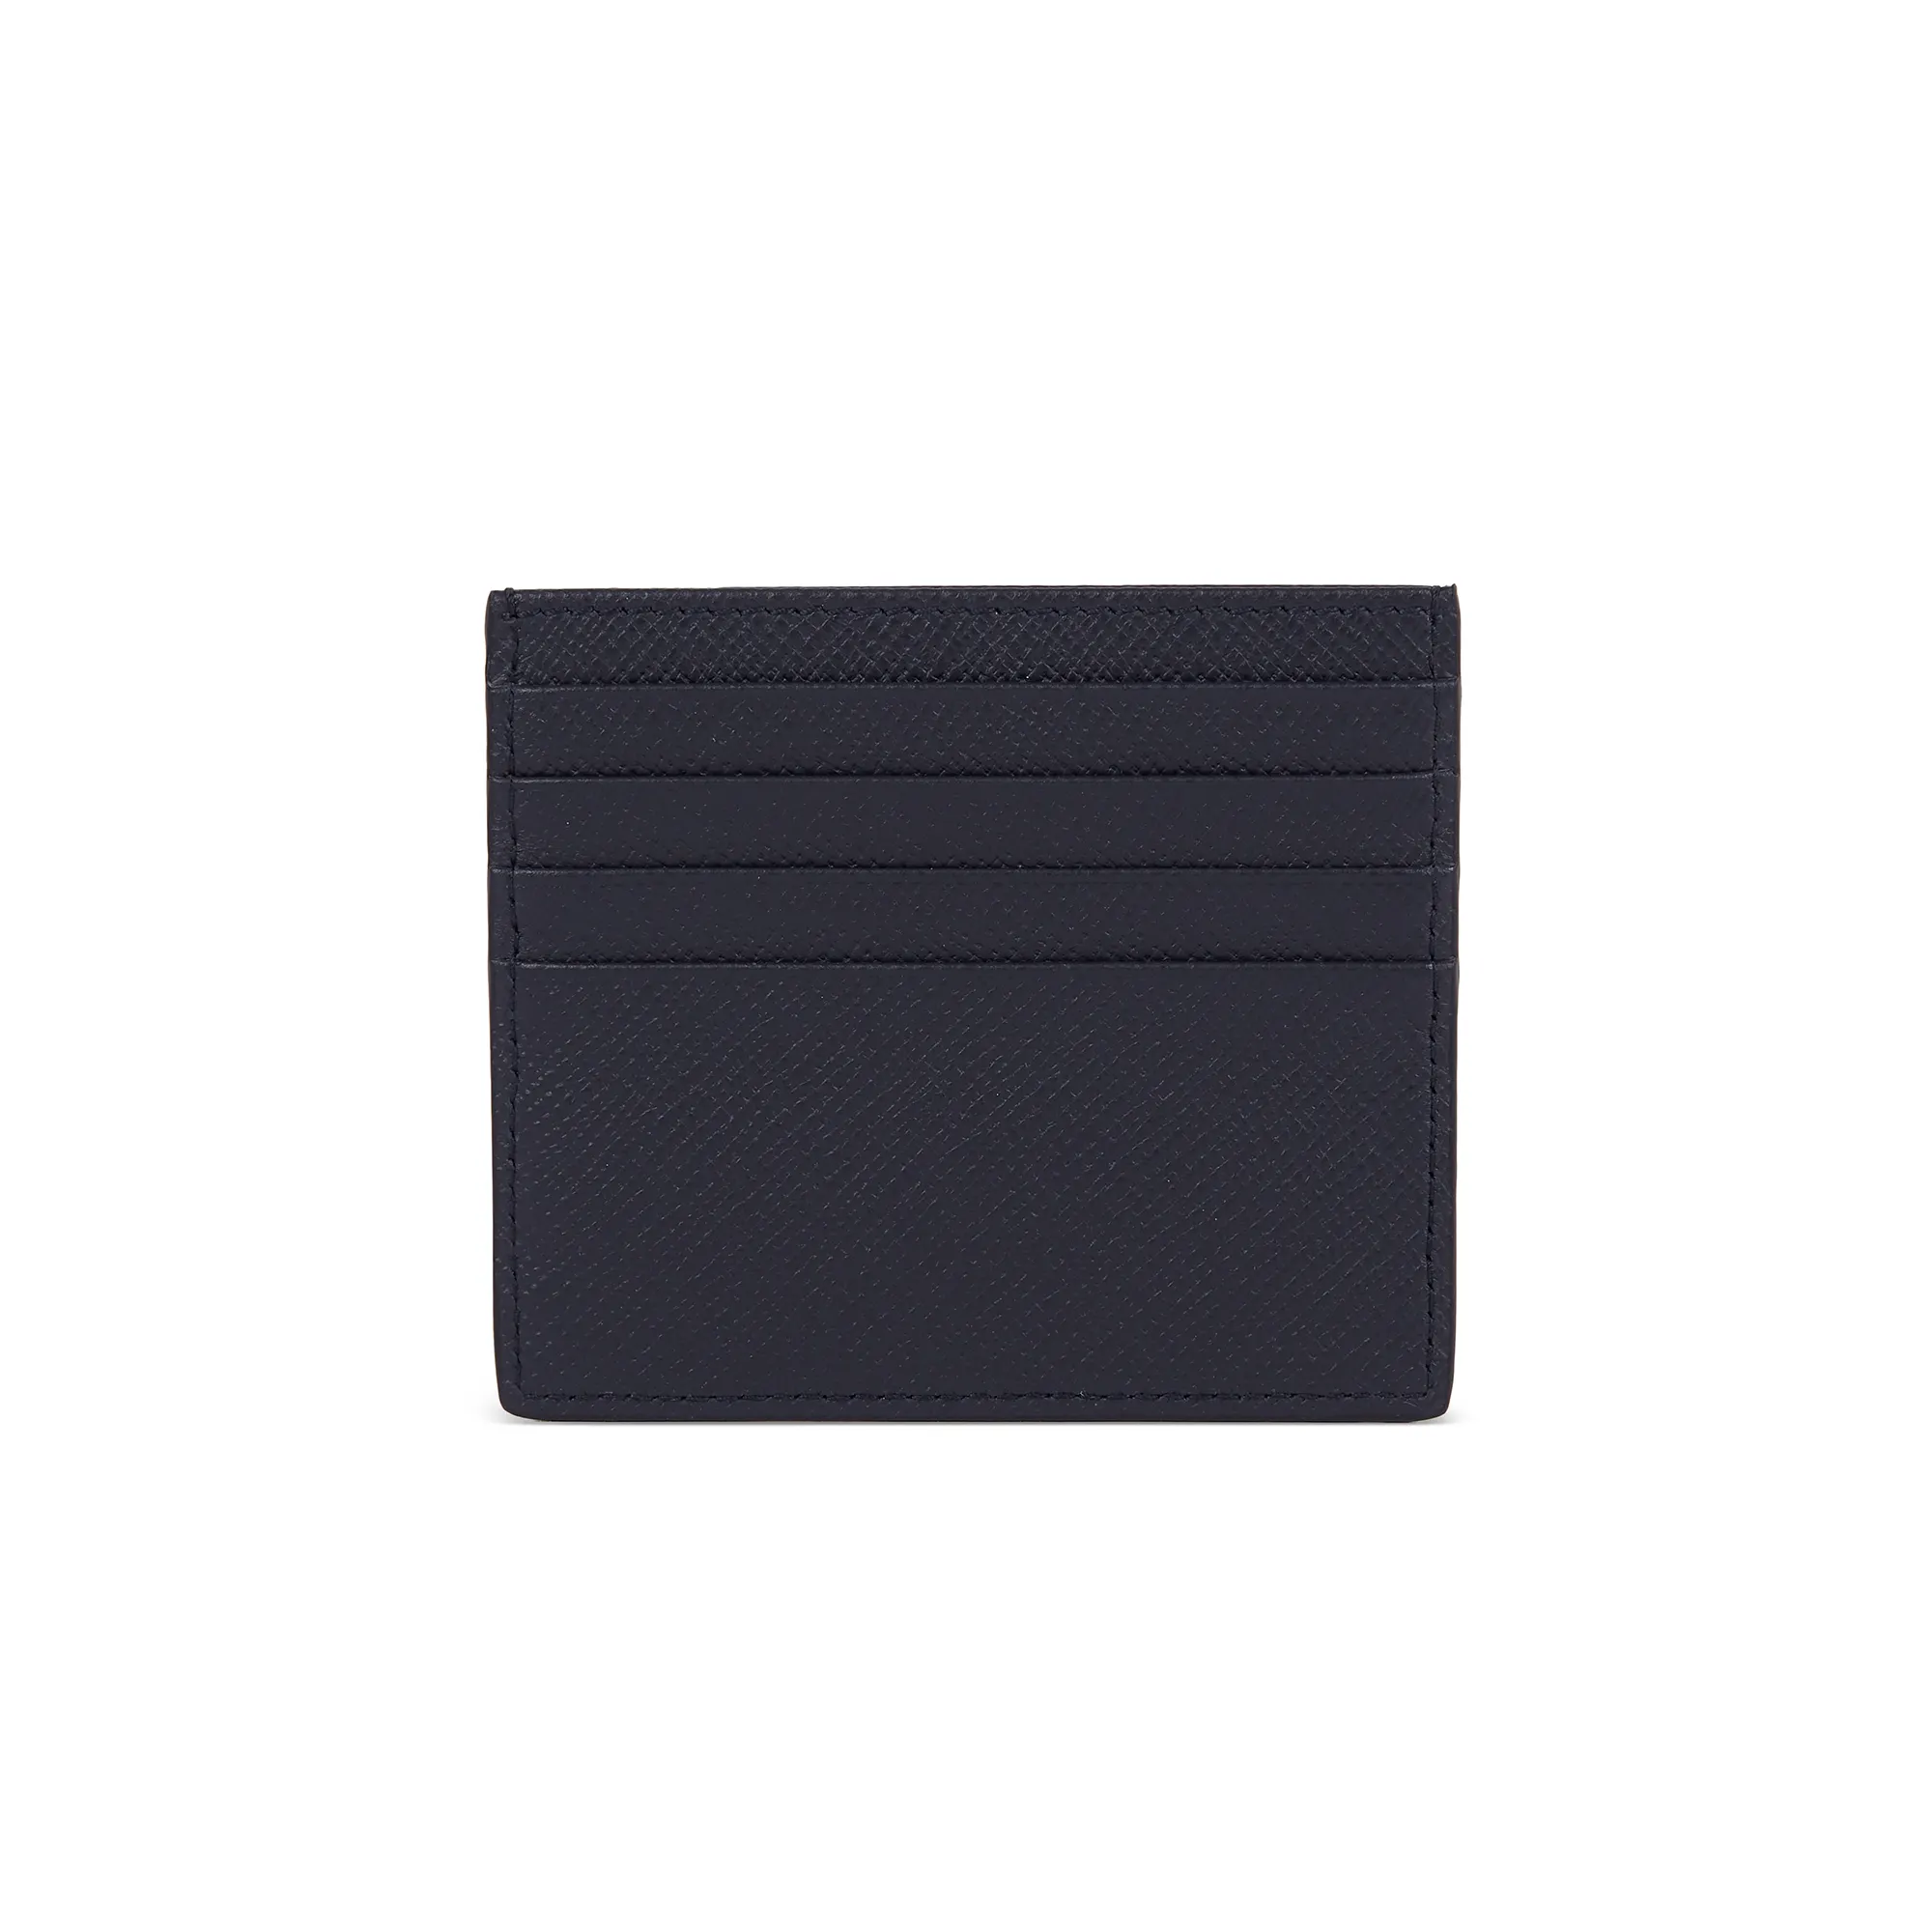 Diskon besar kustom Logo warna kulit Saffiano tempat kartu kredit ramping dompet minimalis RFID penjepit uang pemegang kartu